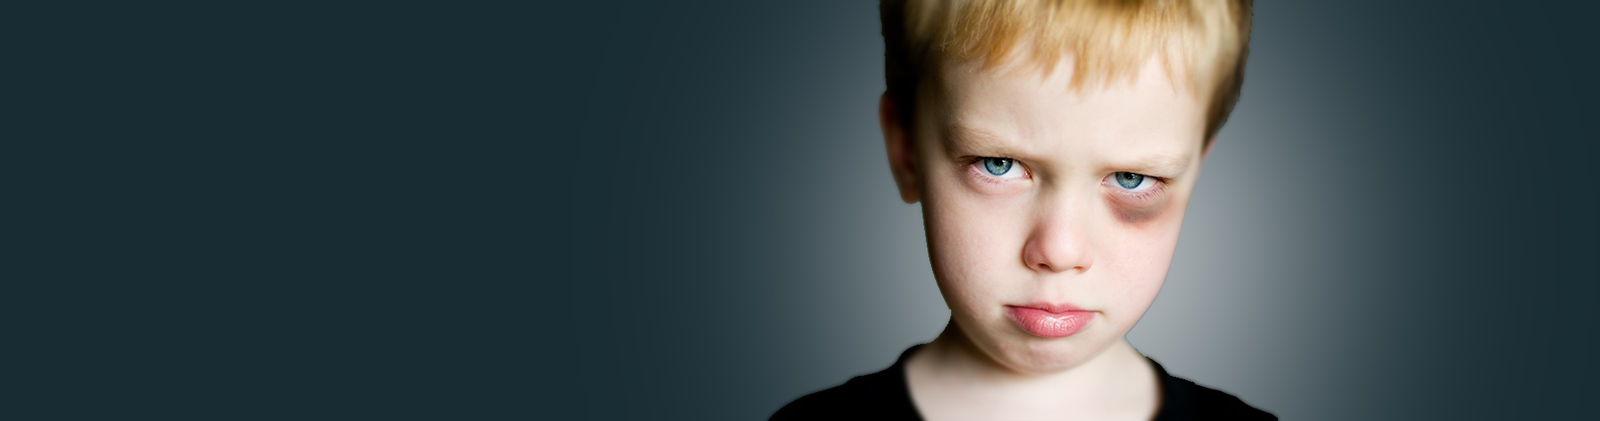 Preventing Eye Injuries in Children